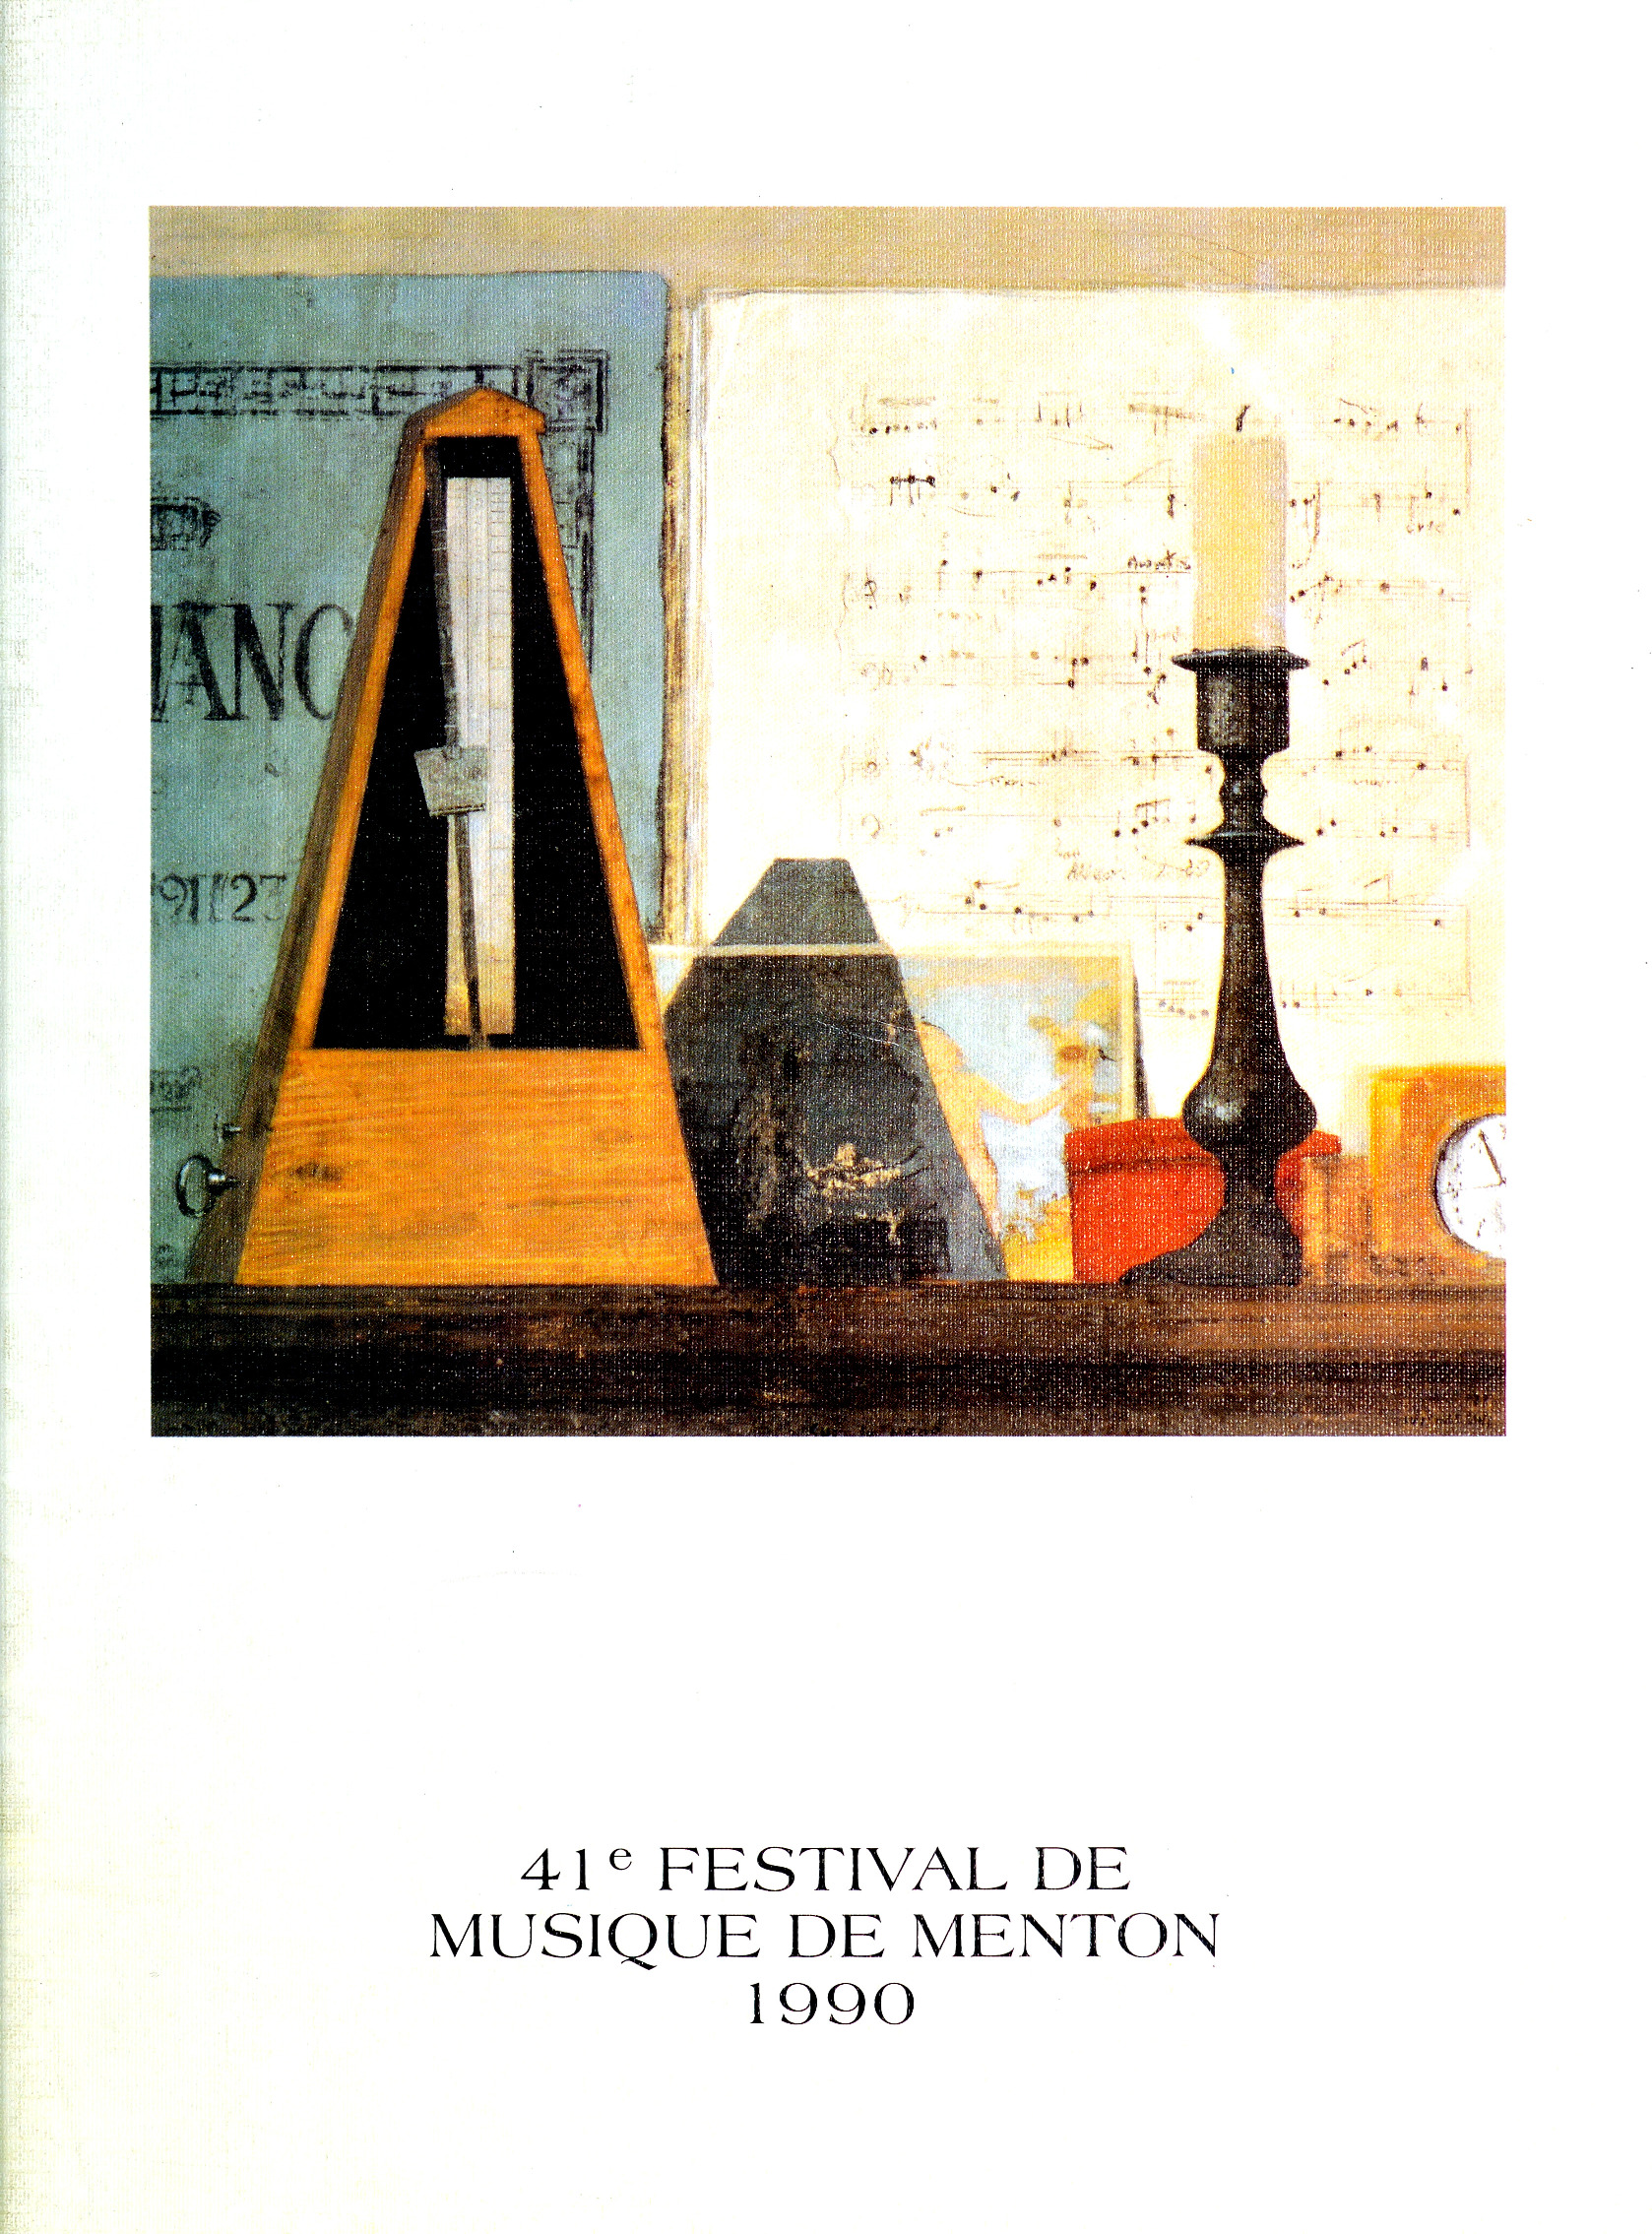 Festival de musique de Menton 1990